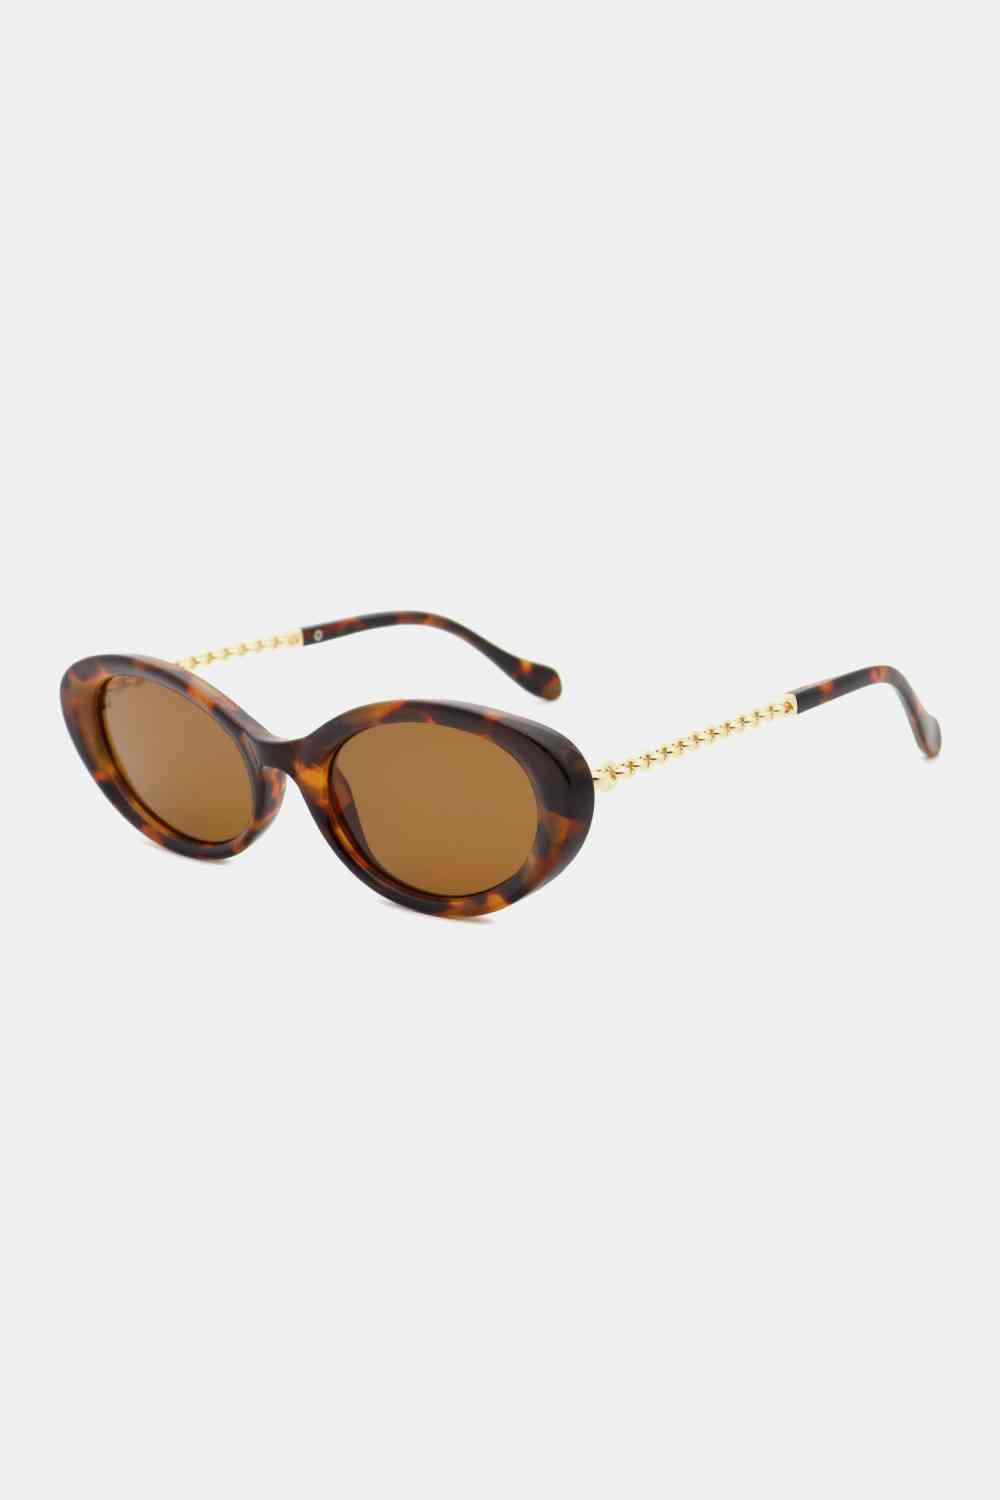 TEEK - Decide Frame Cat-Eye Sunglasses EYEGLASSES TEEK Trend Chestnut One Size 